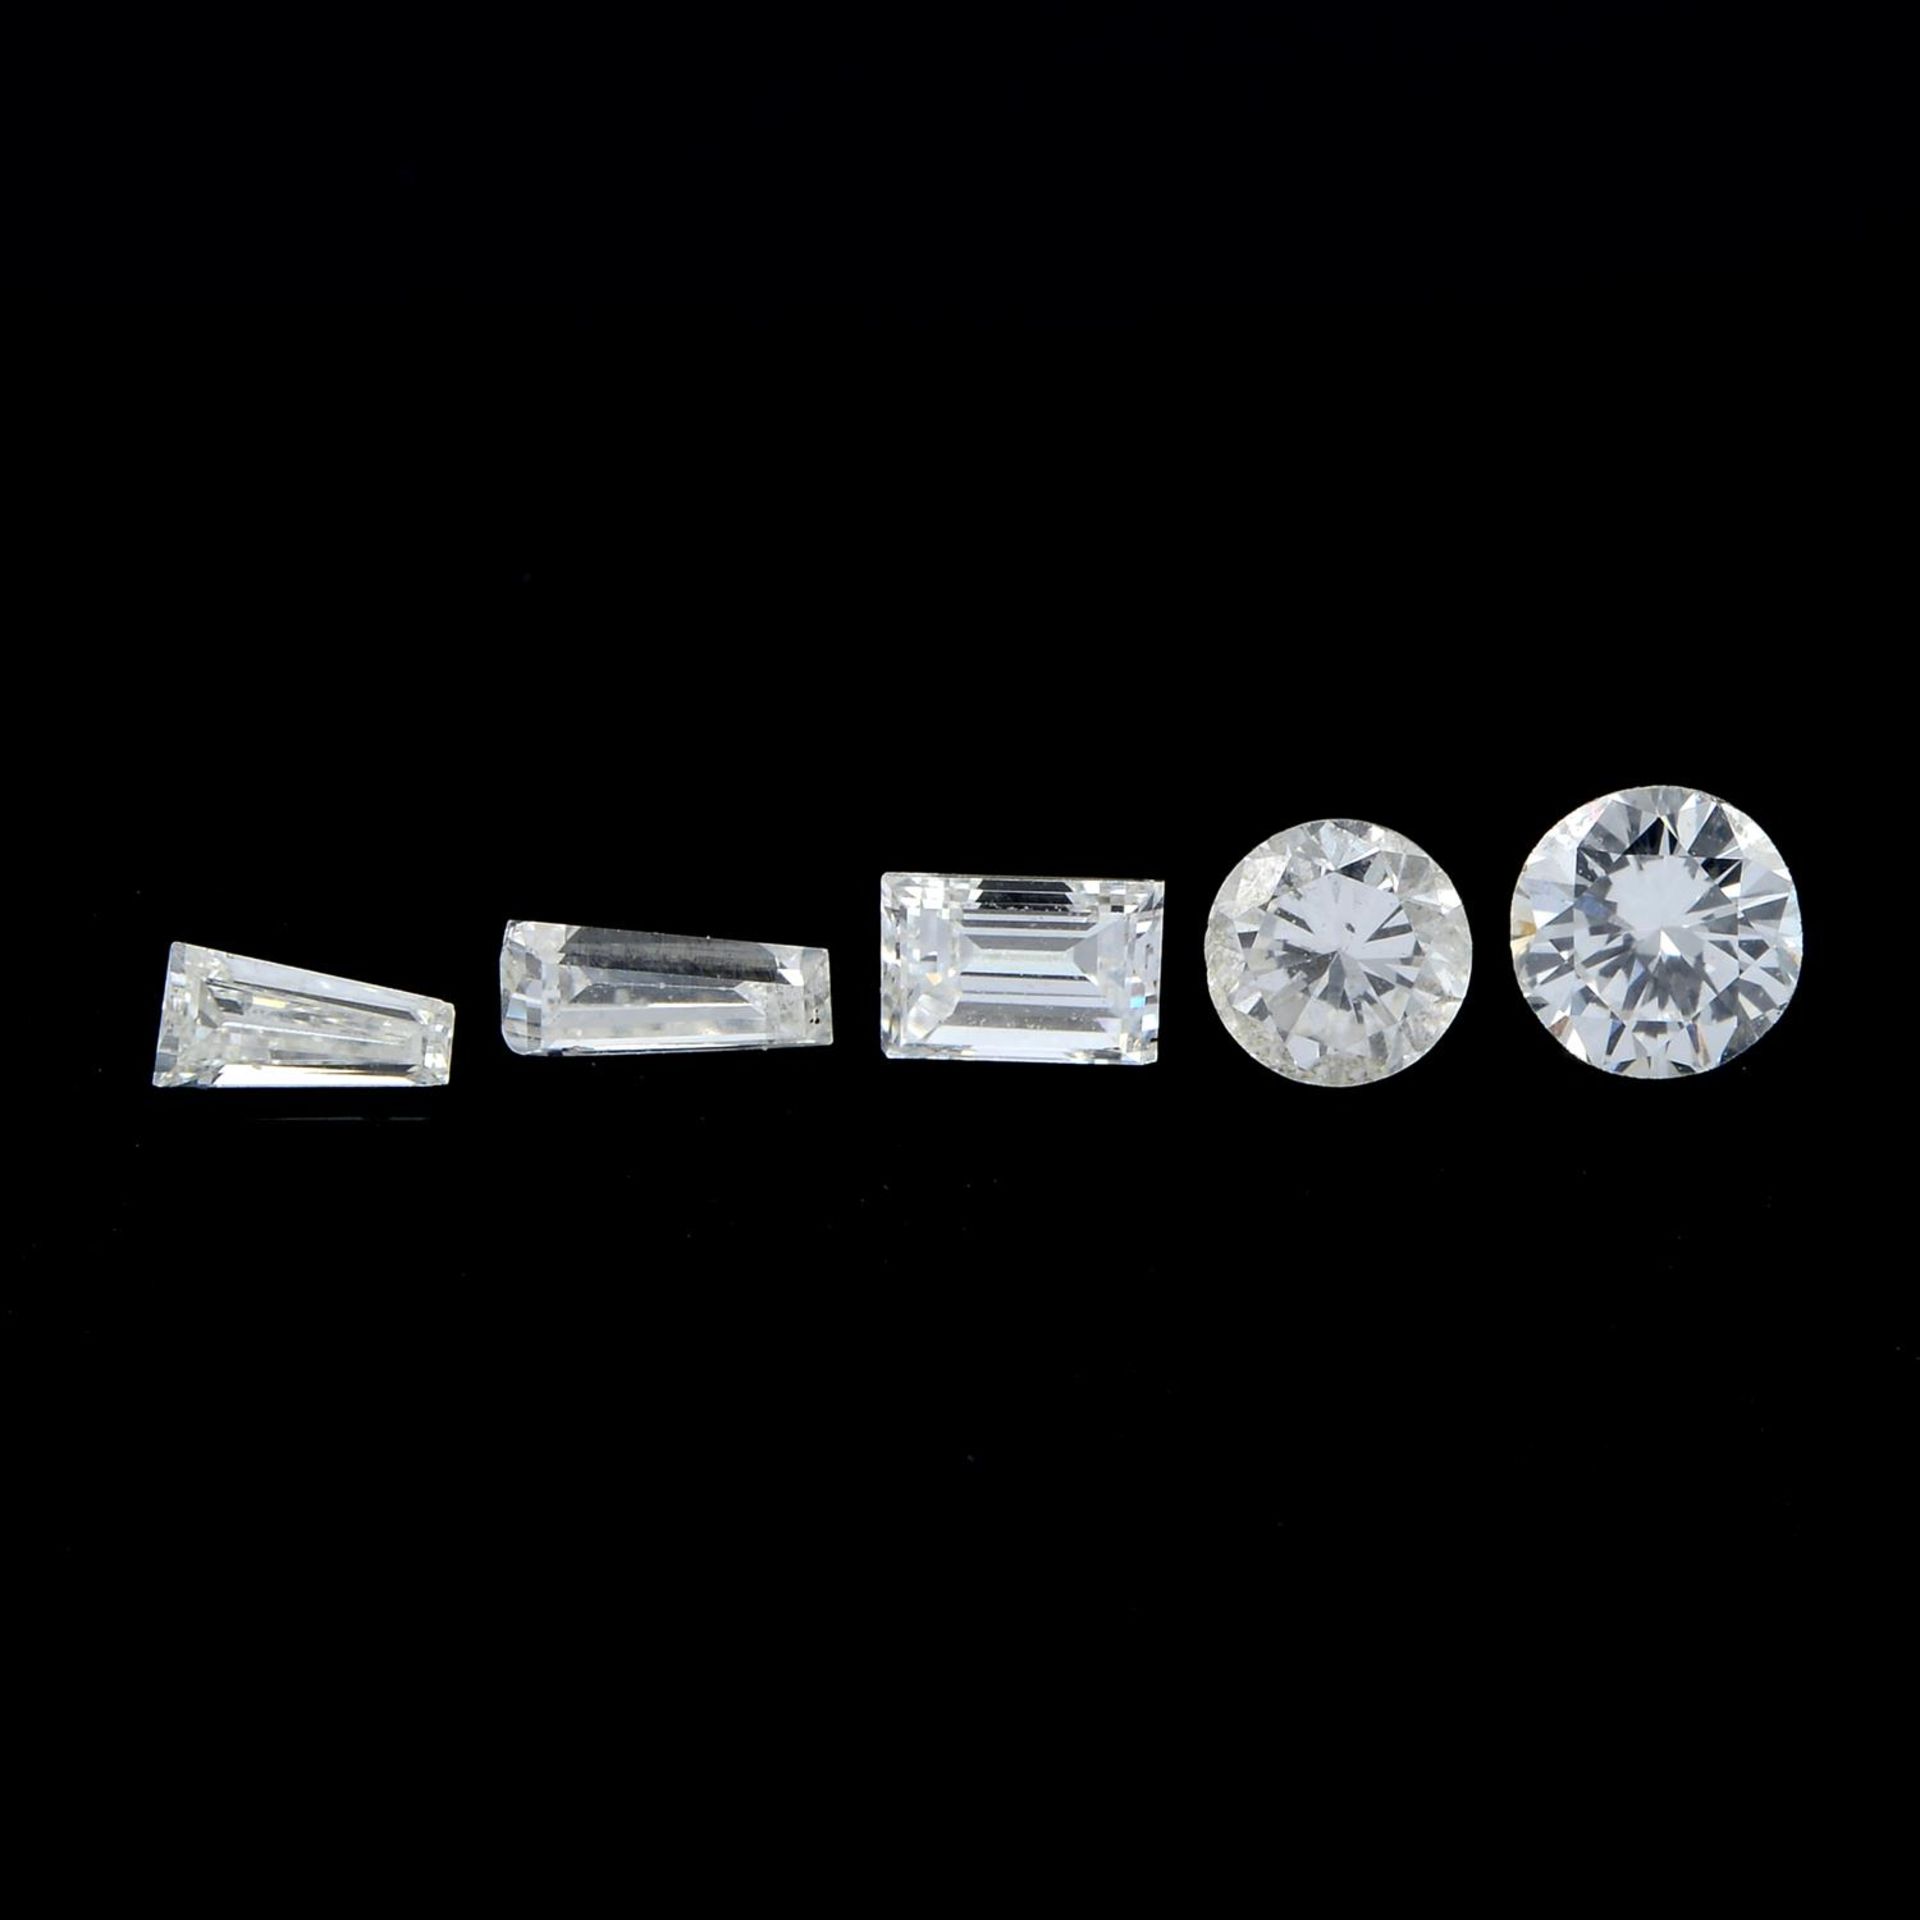 Five vari-cut diamonds, total weight 0.55ct.